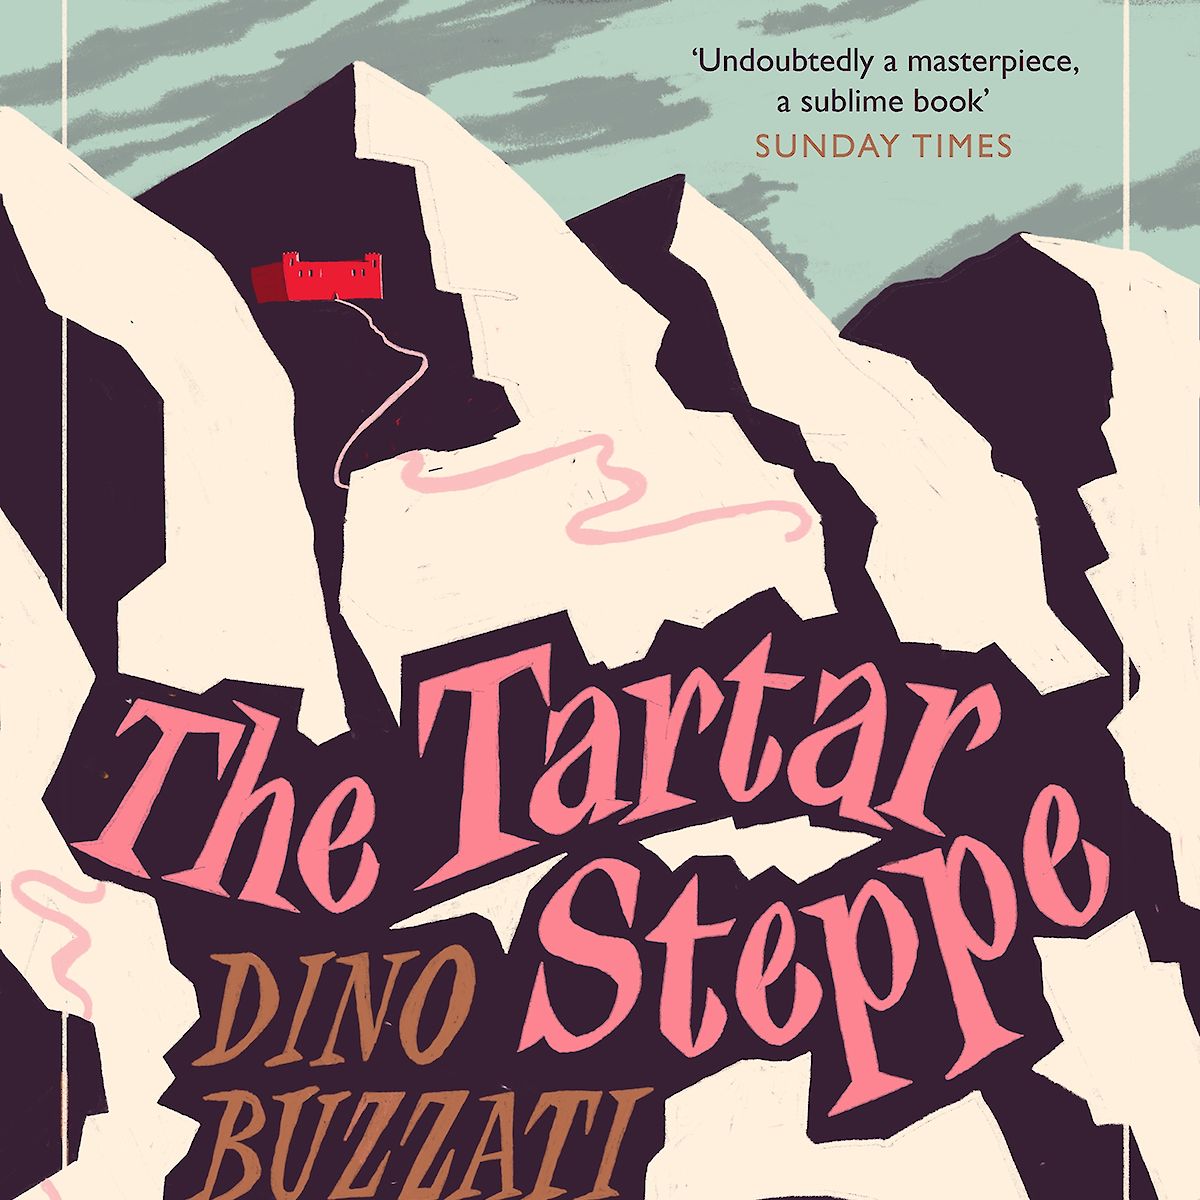 The Silent Steppe by Mukhamet Shayakhmetov